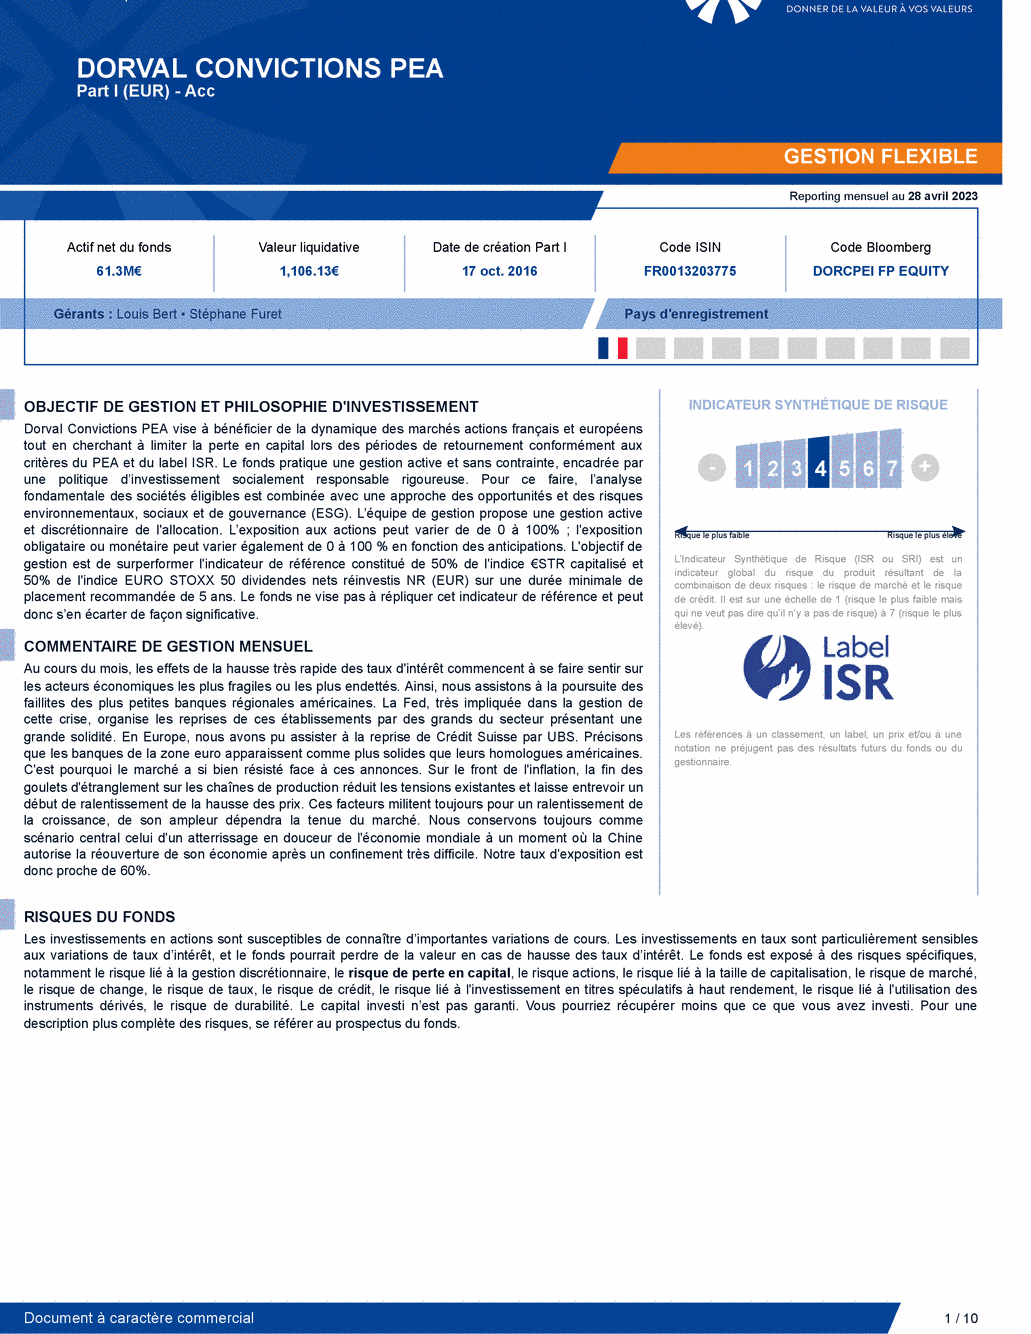 Reporting DORVAL CONVICTIONS PEA Part I - 28/04/2023 - Français